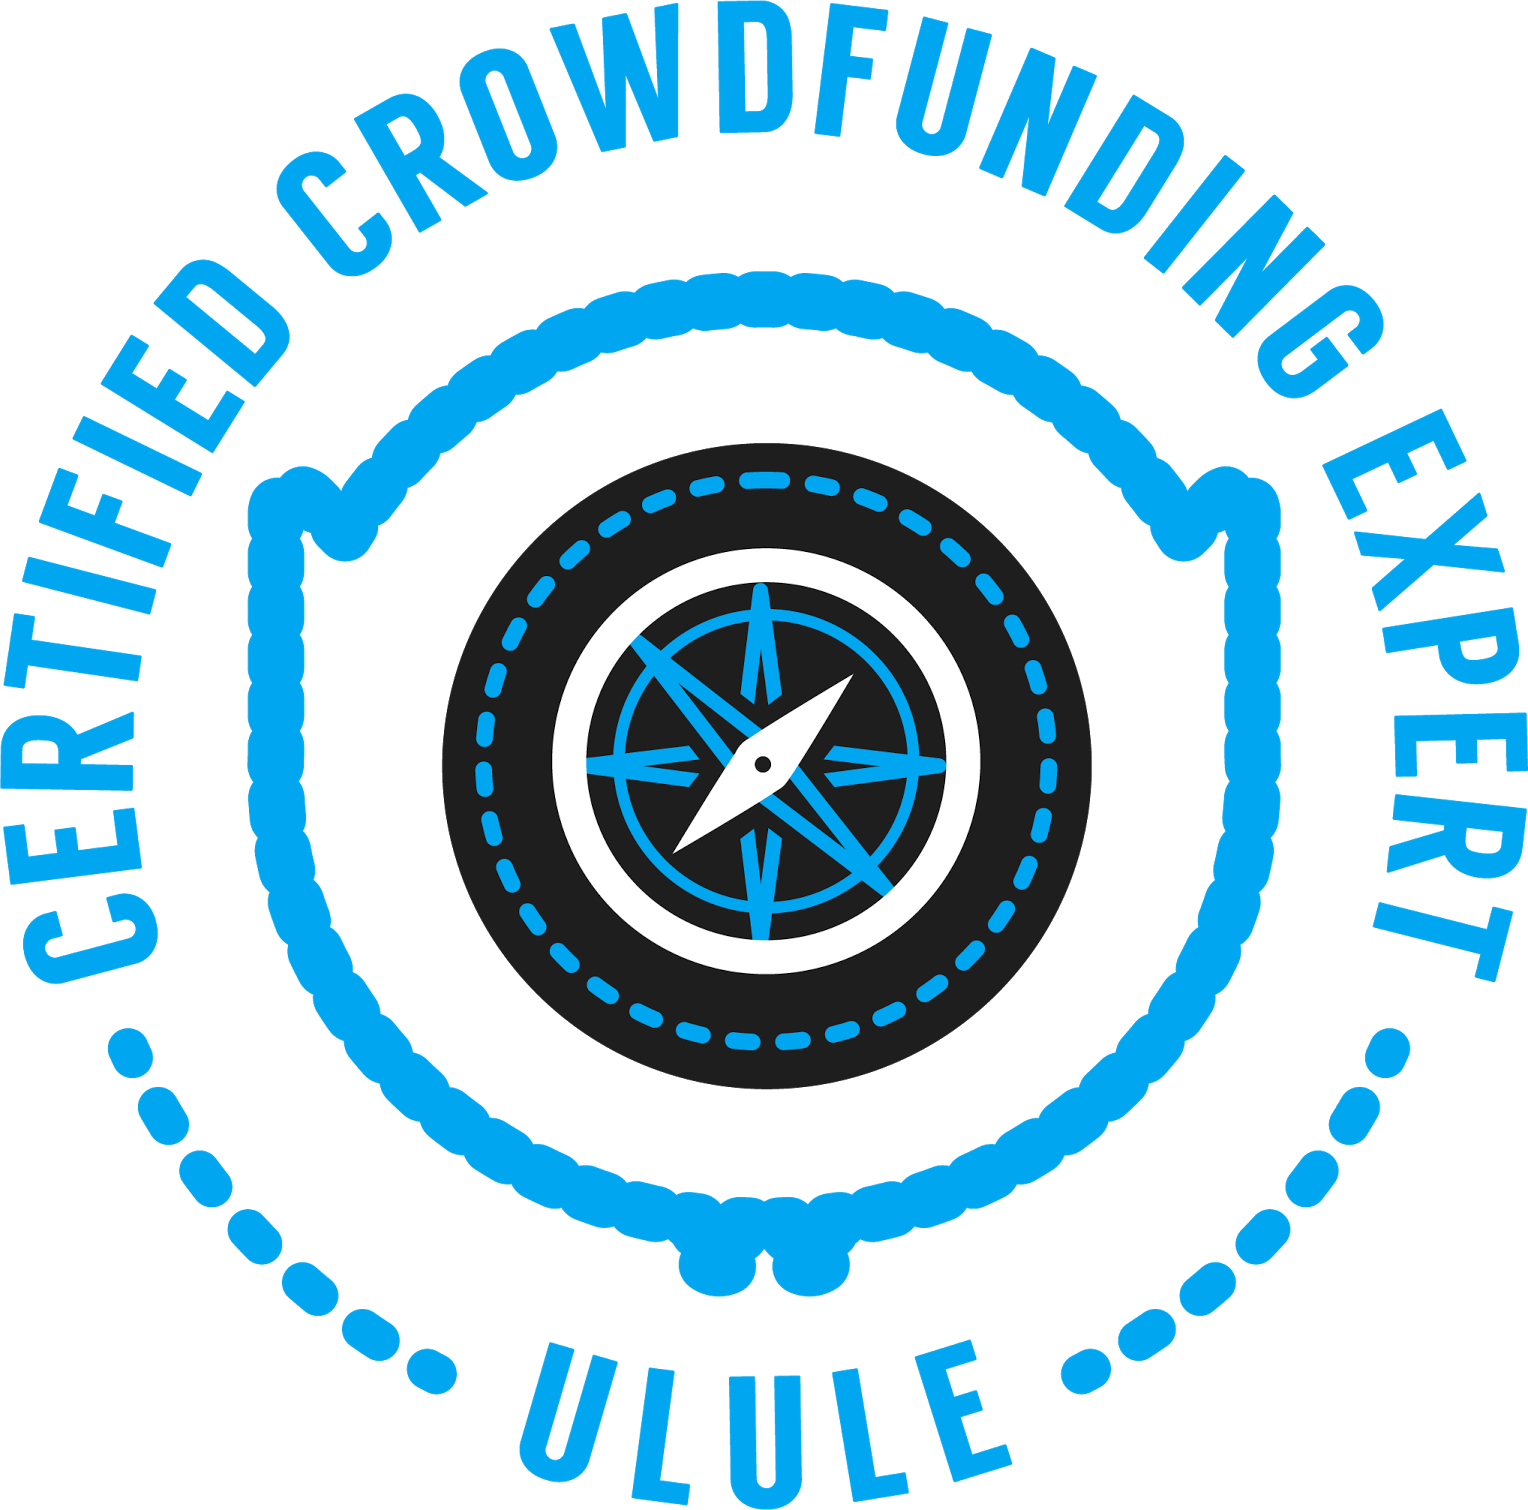 Certified crowdfounding expert Ulule